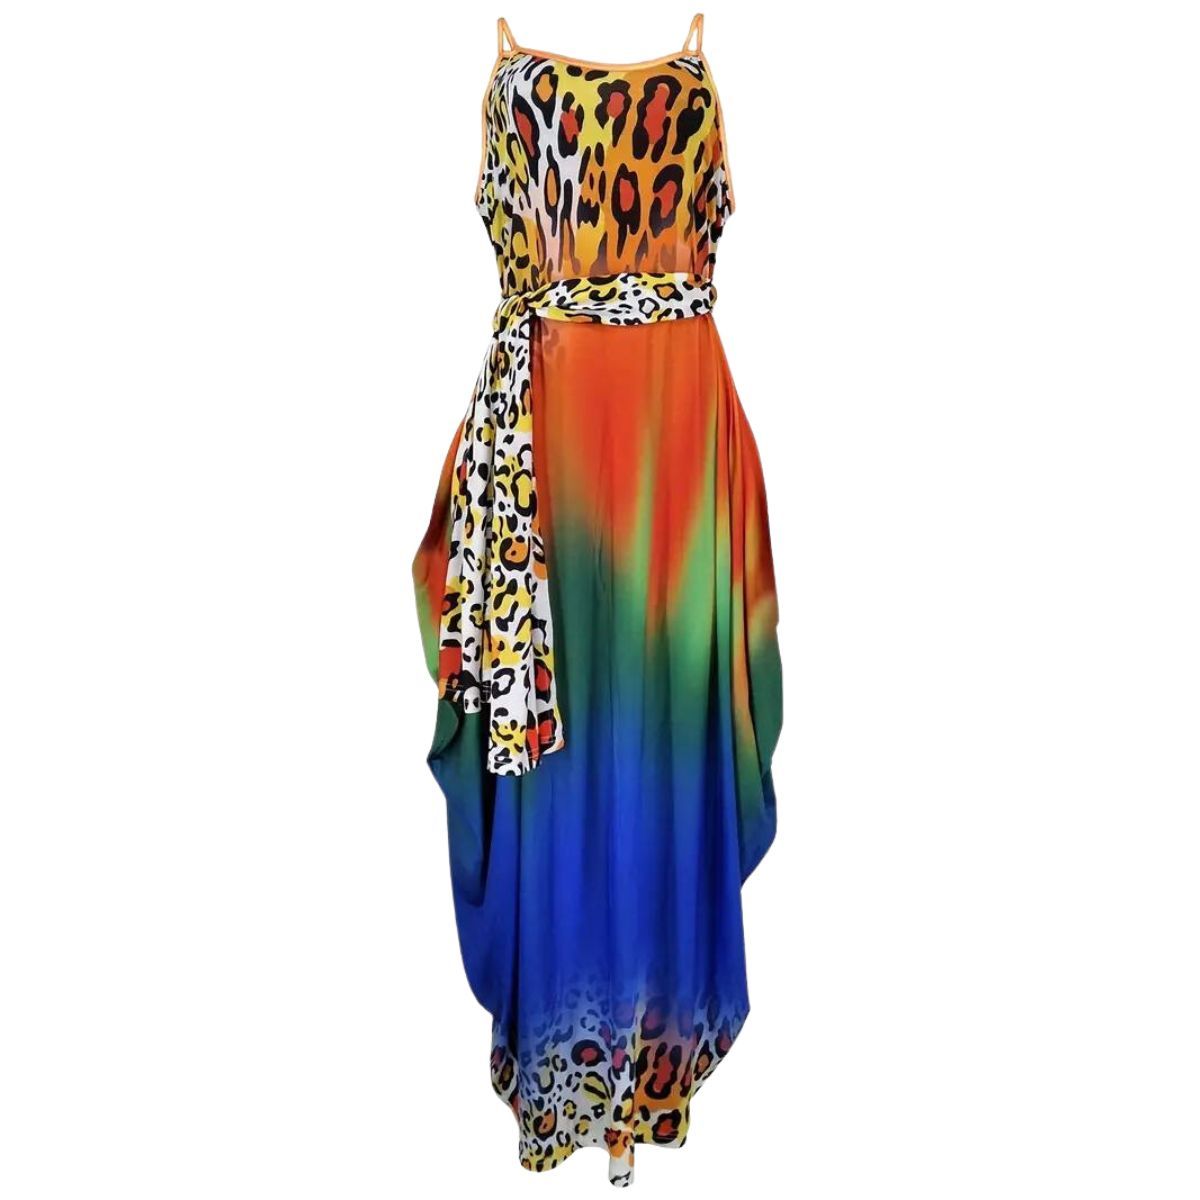 1XL Rainbow Cami Dress